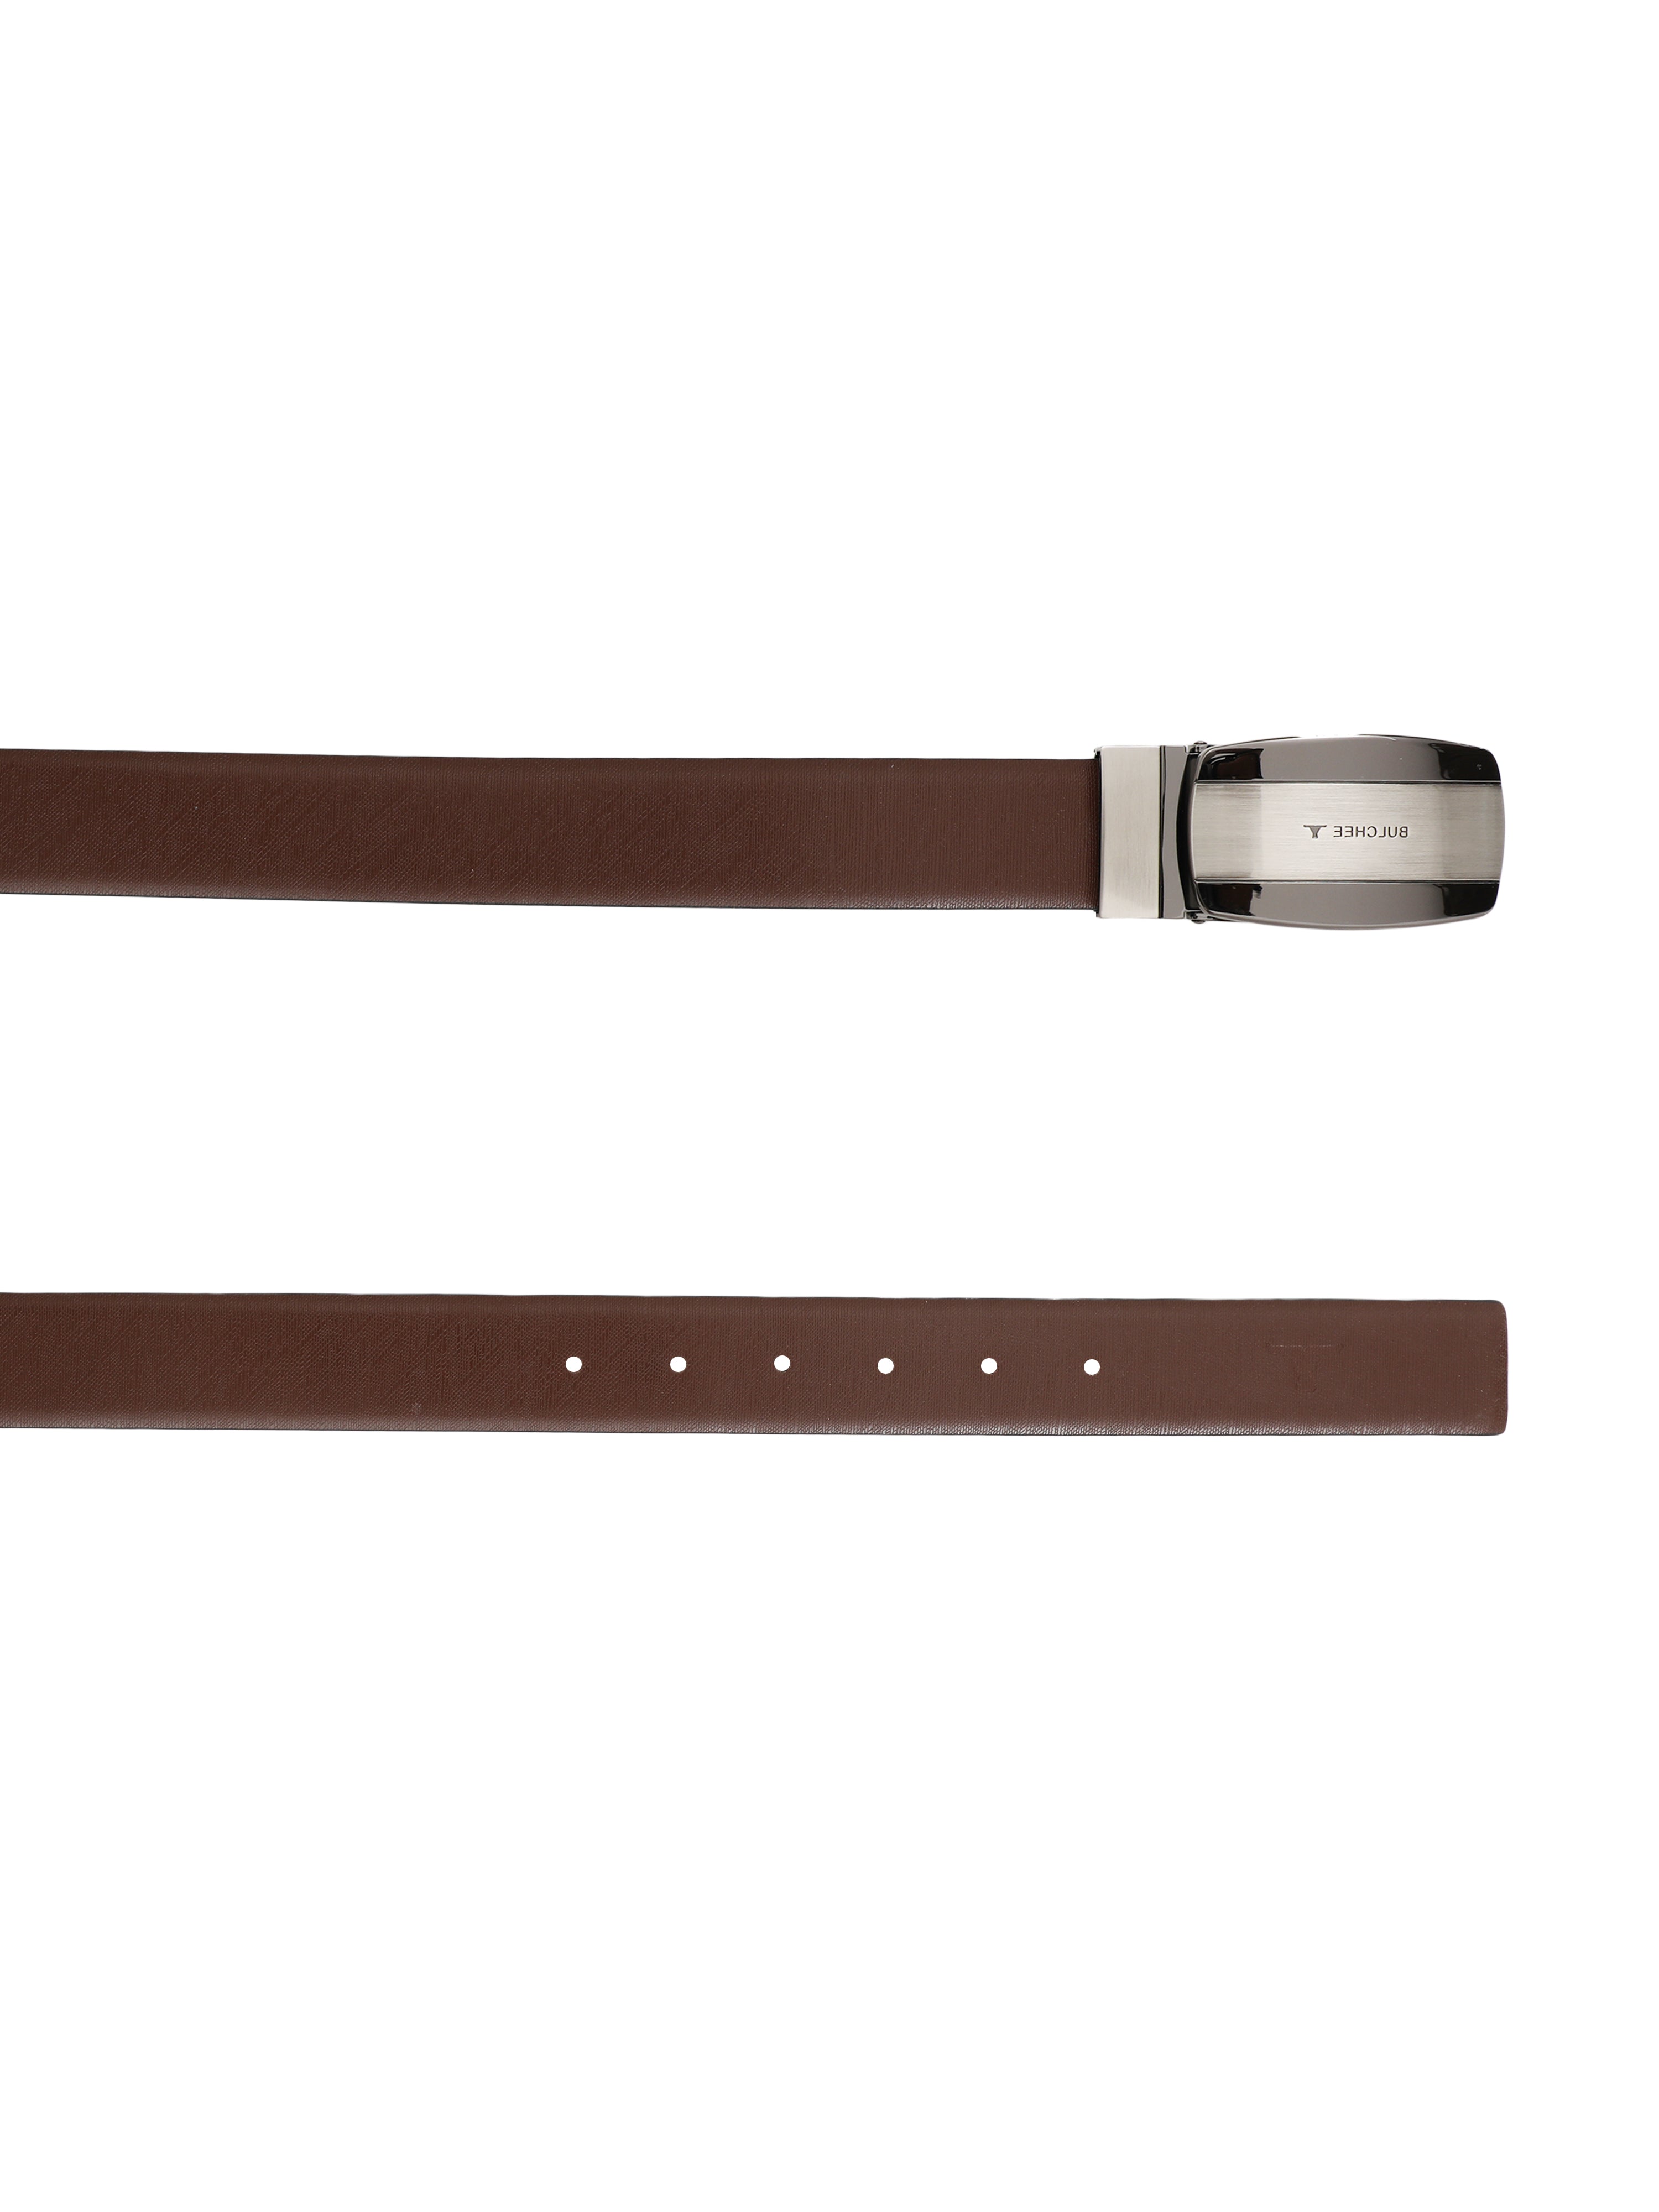 Bulchee Premium Collections Men's Genuine Leather Belt | Reversible Flat | Black/Brown | BUL2120B